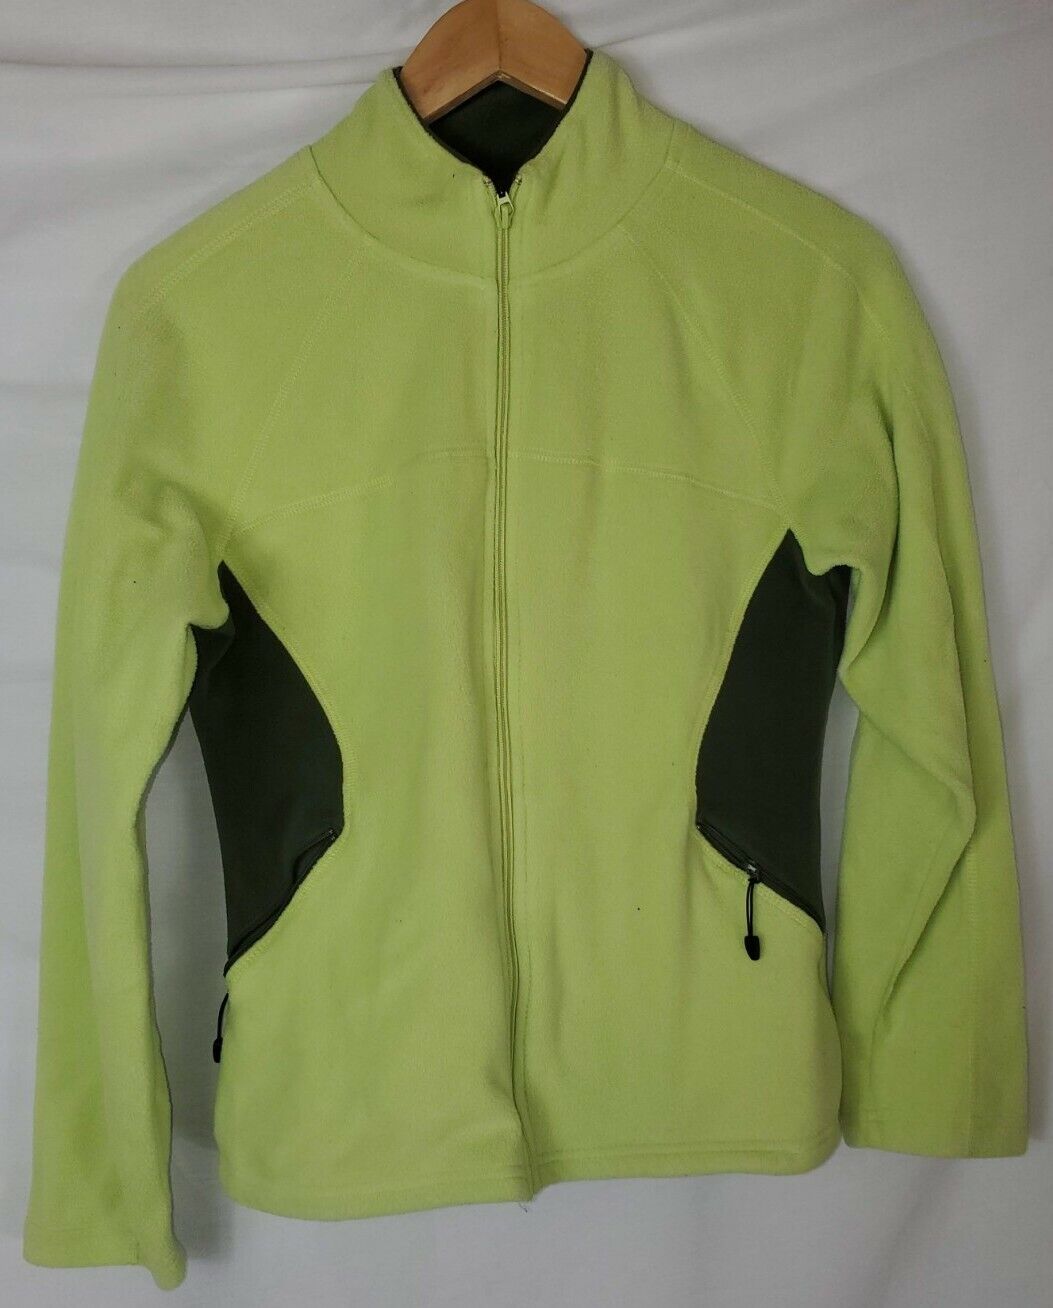 C9 by Champion Size Small Green Full-Zip Jacket Long Sleeve | eBay